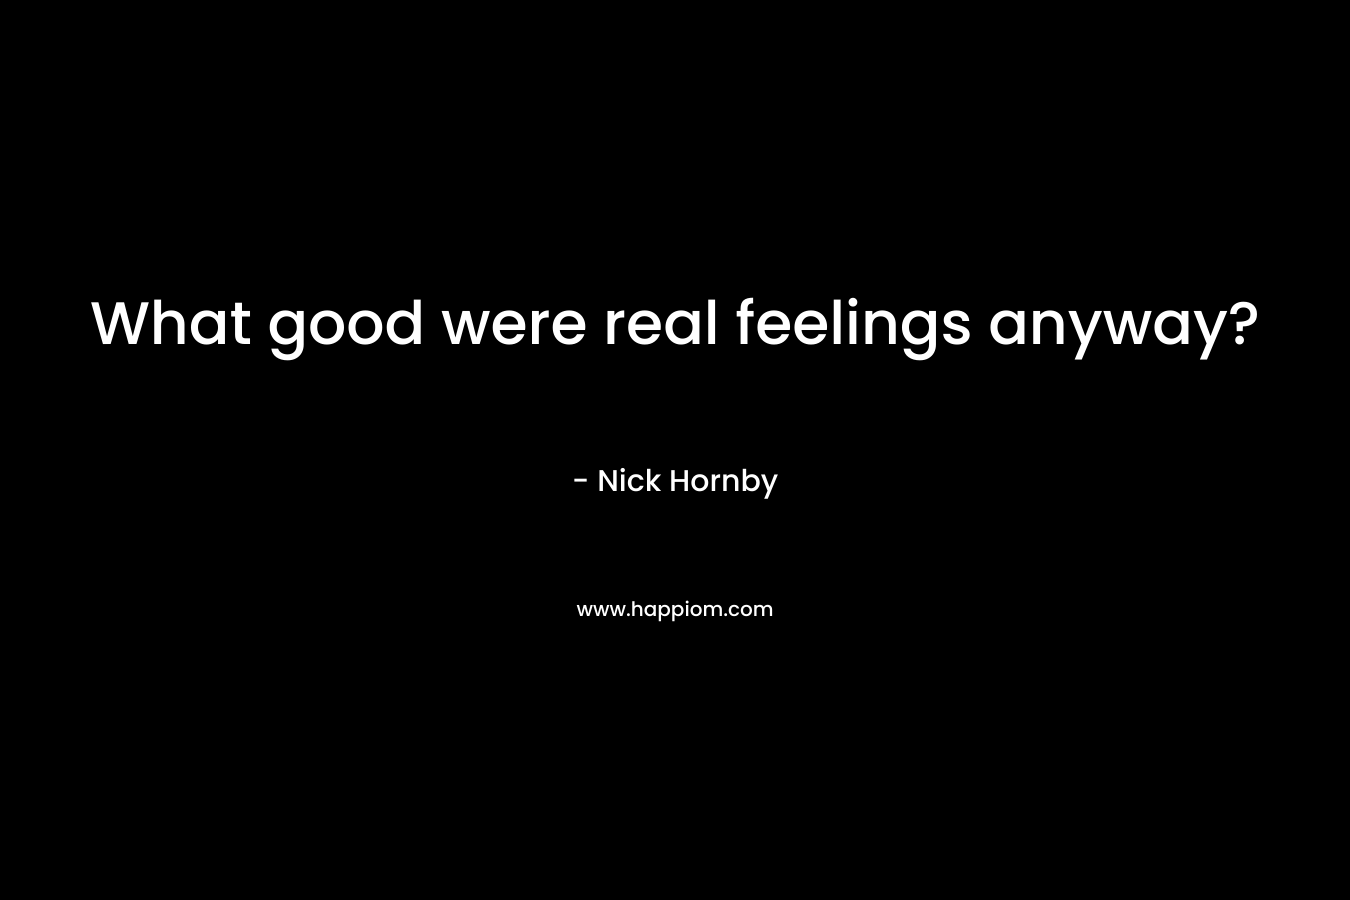 What good were real feelings anyway?